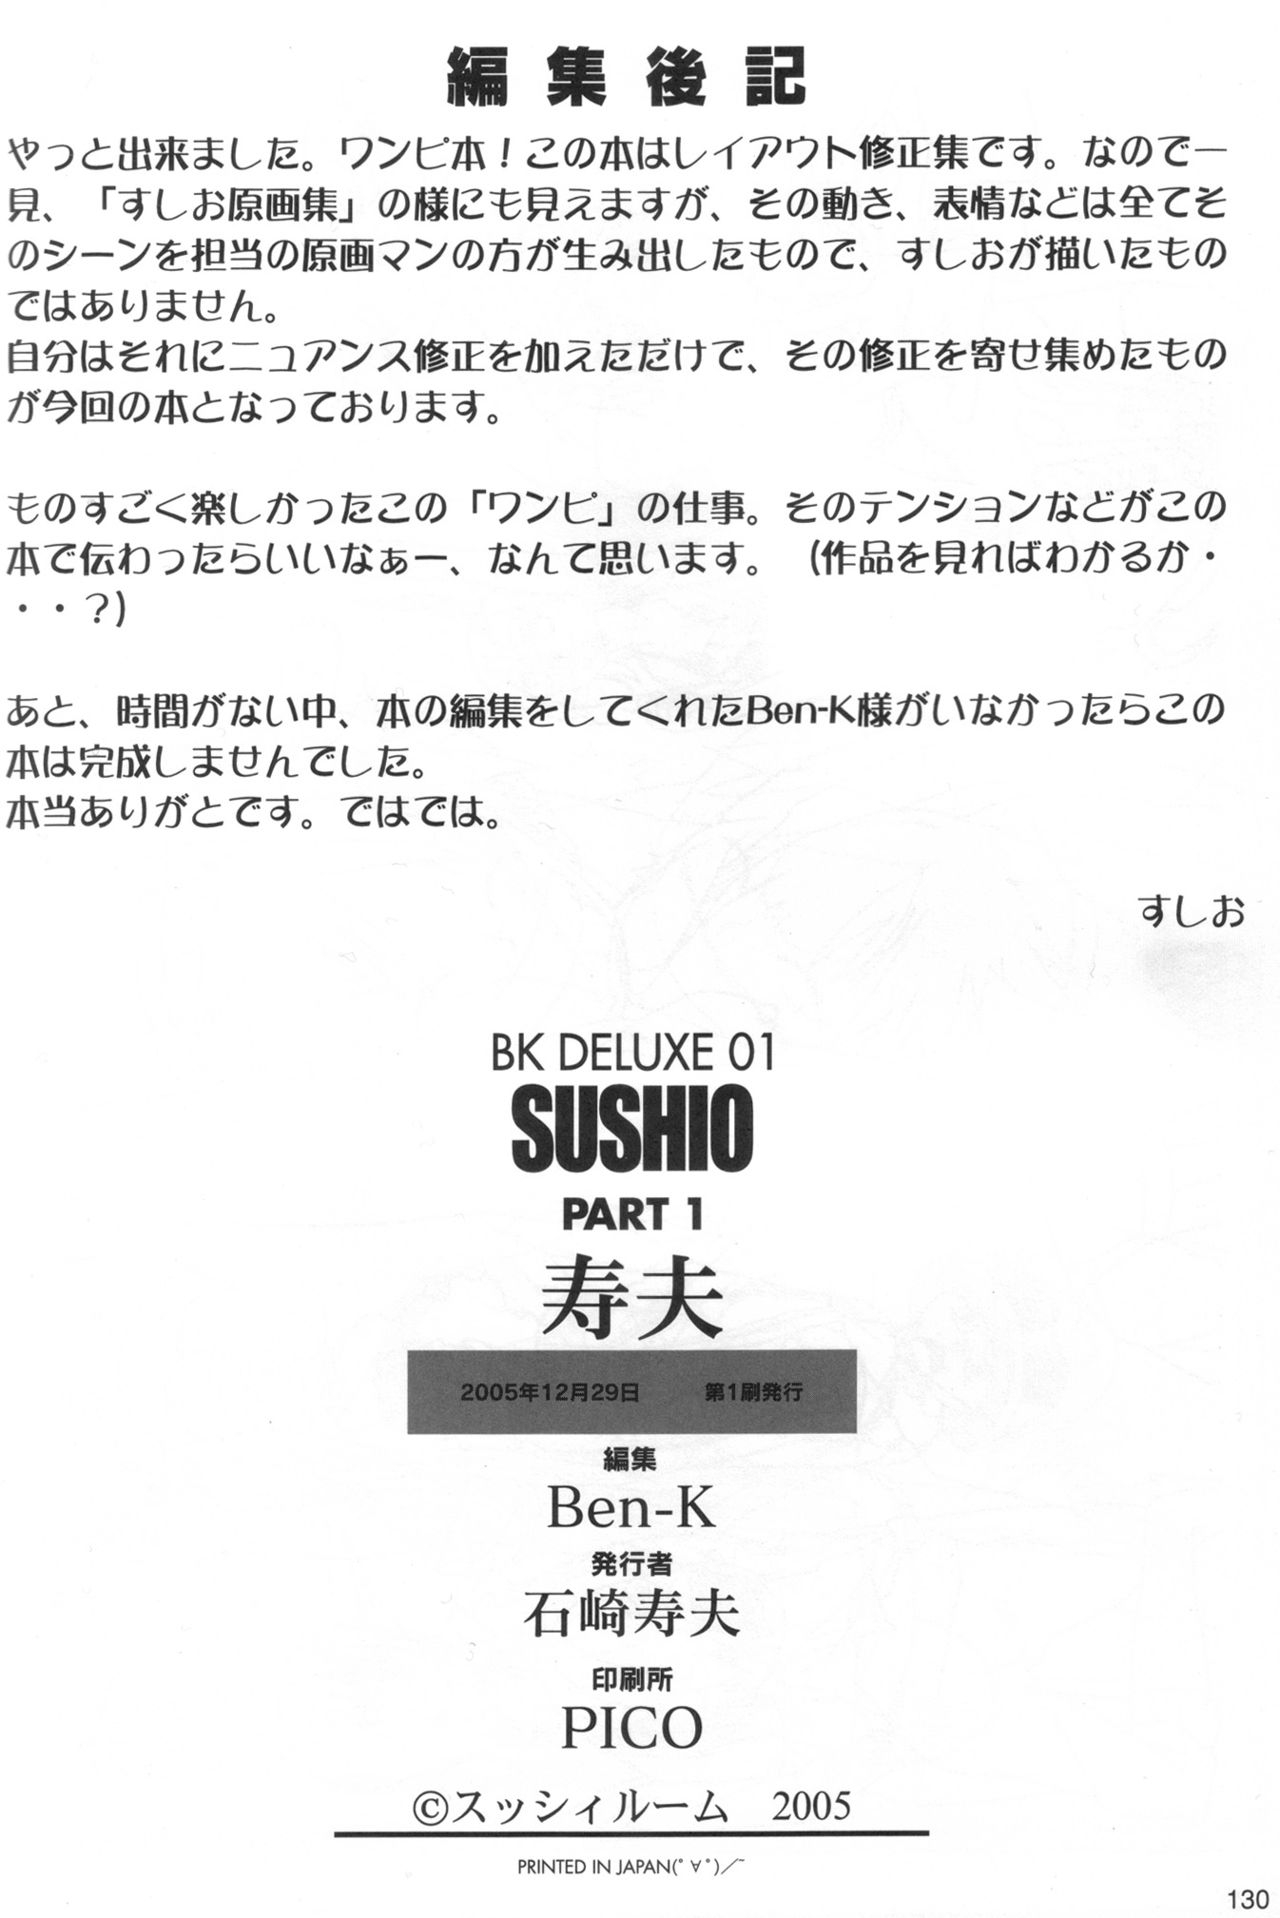 [Artbook] Sushio One Piece Movie 06 - Pencil Test and Design Book 128